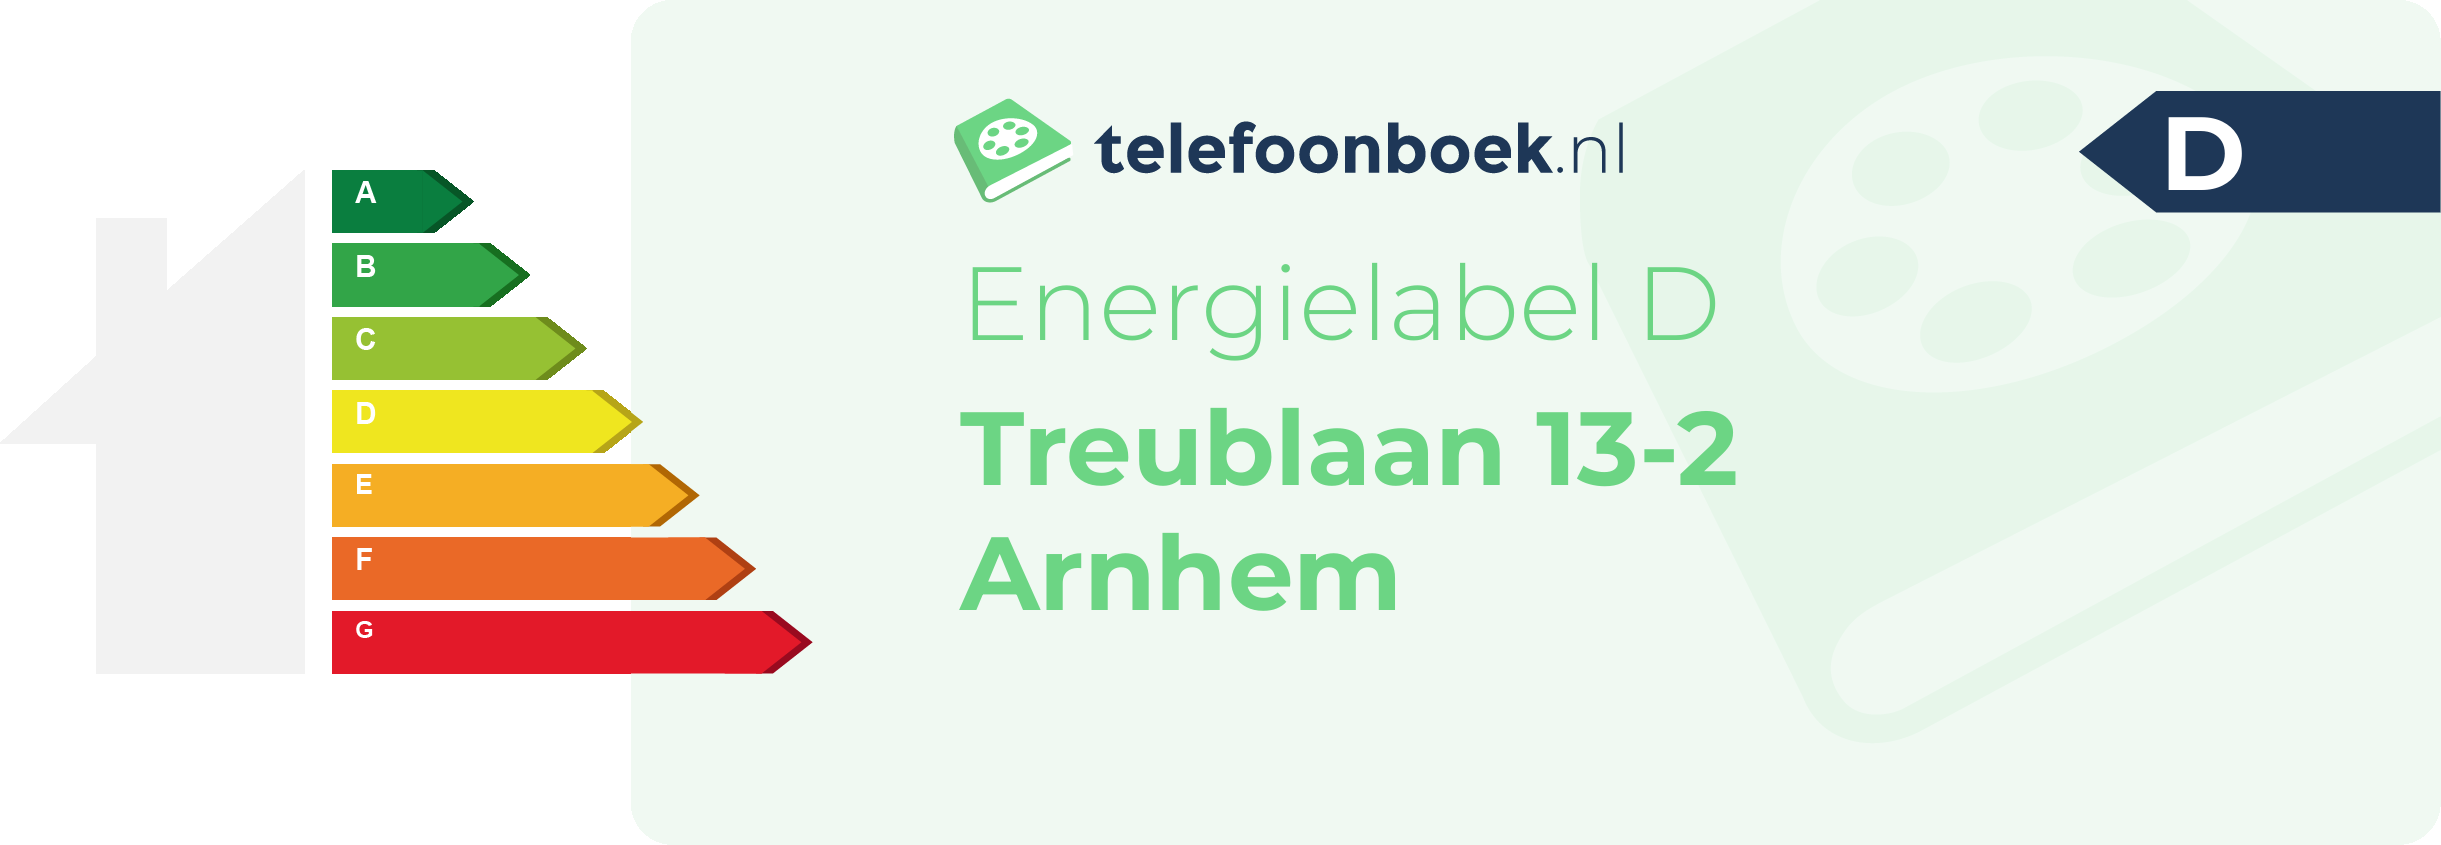 Energielabel Treublaan 13-2 Arnhem